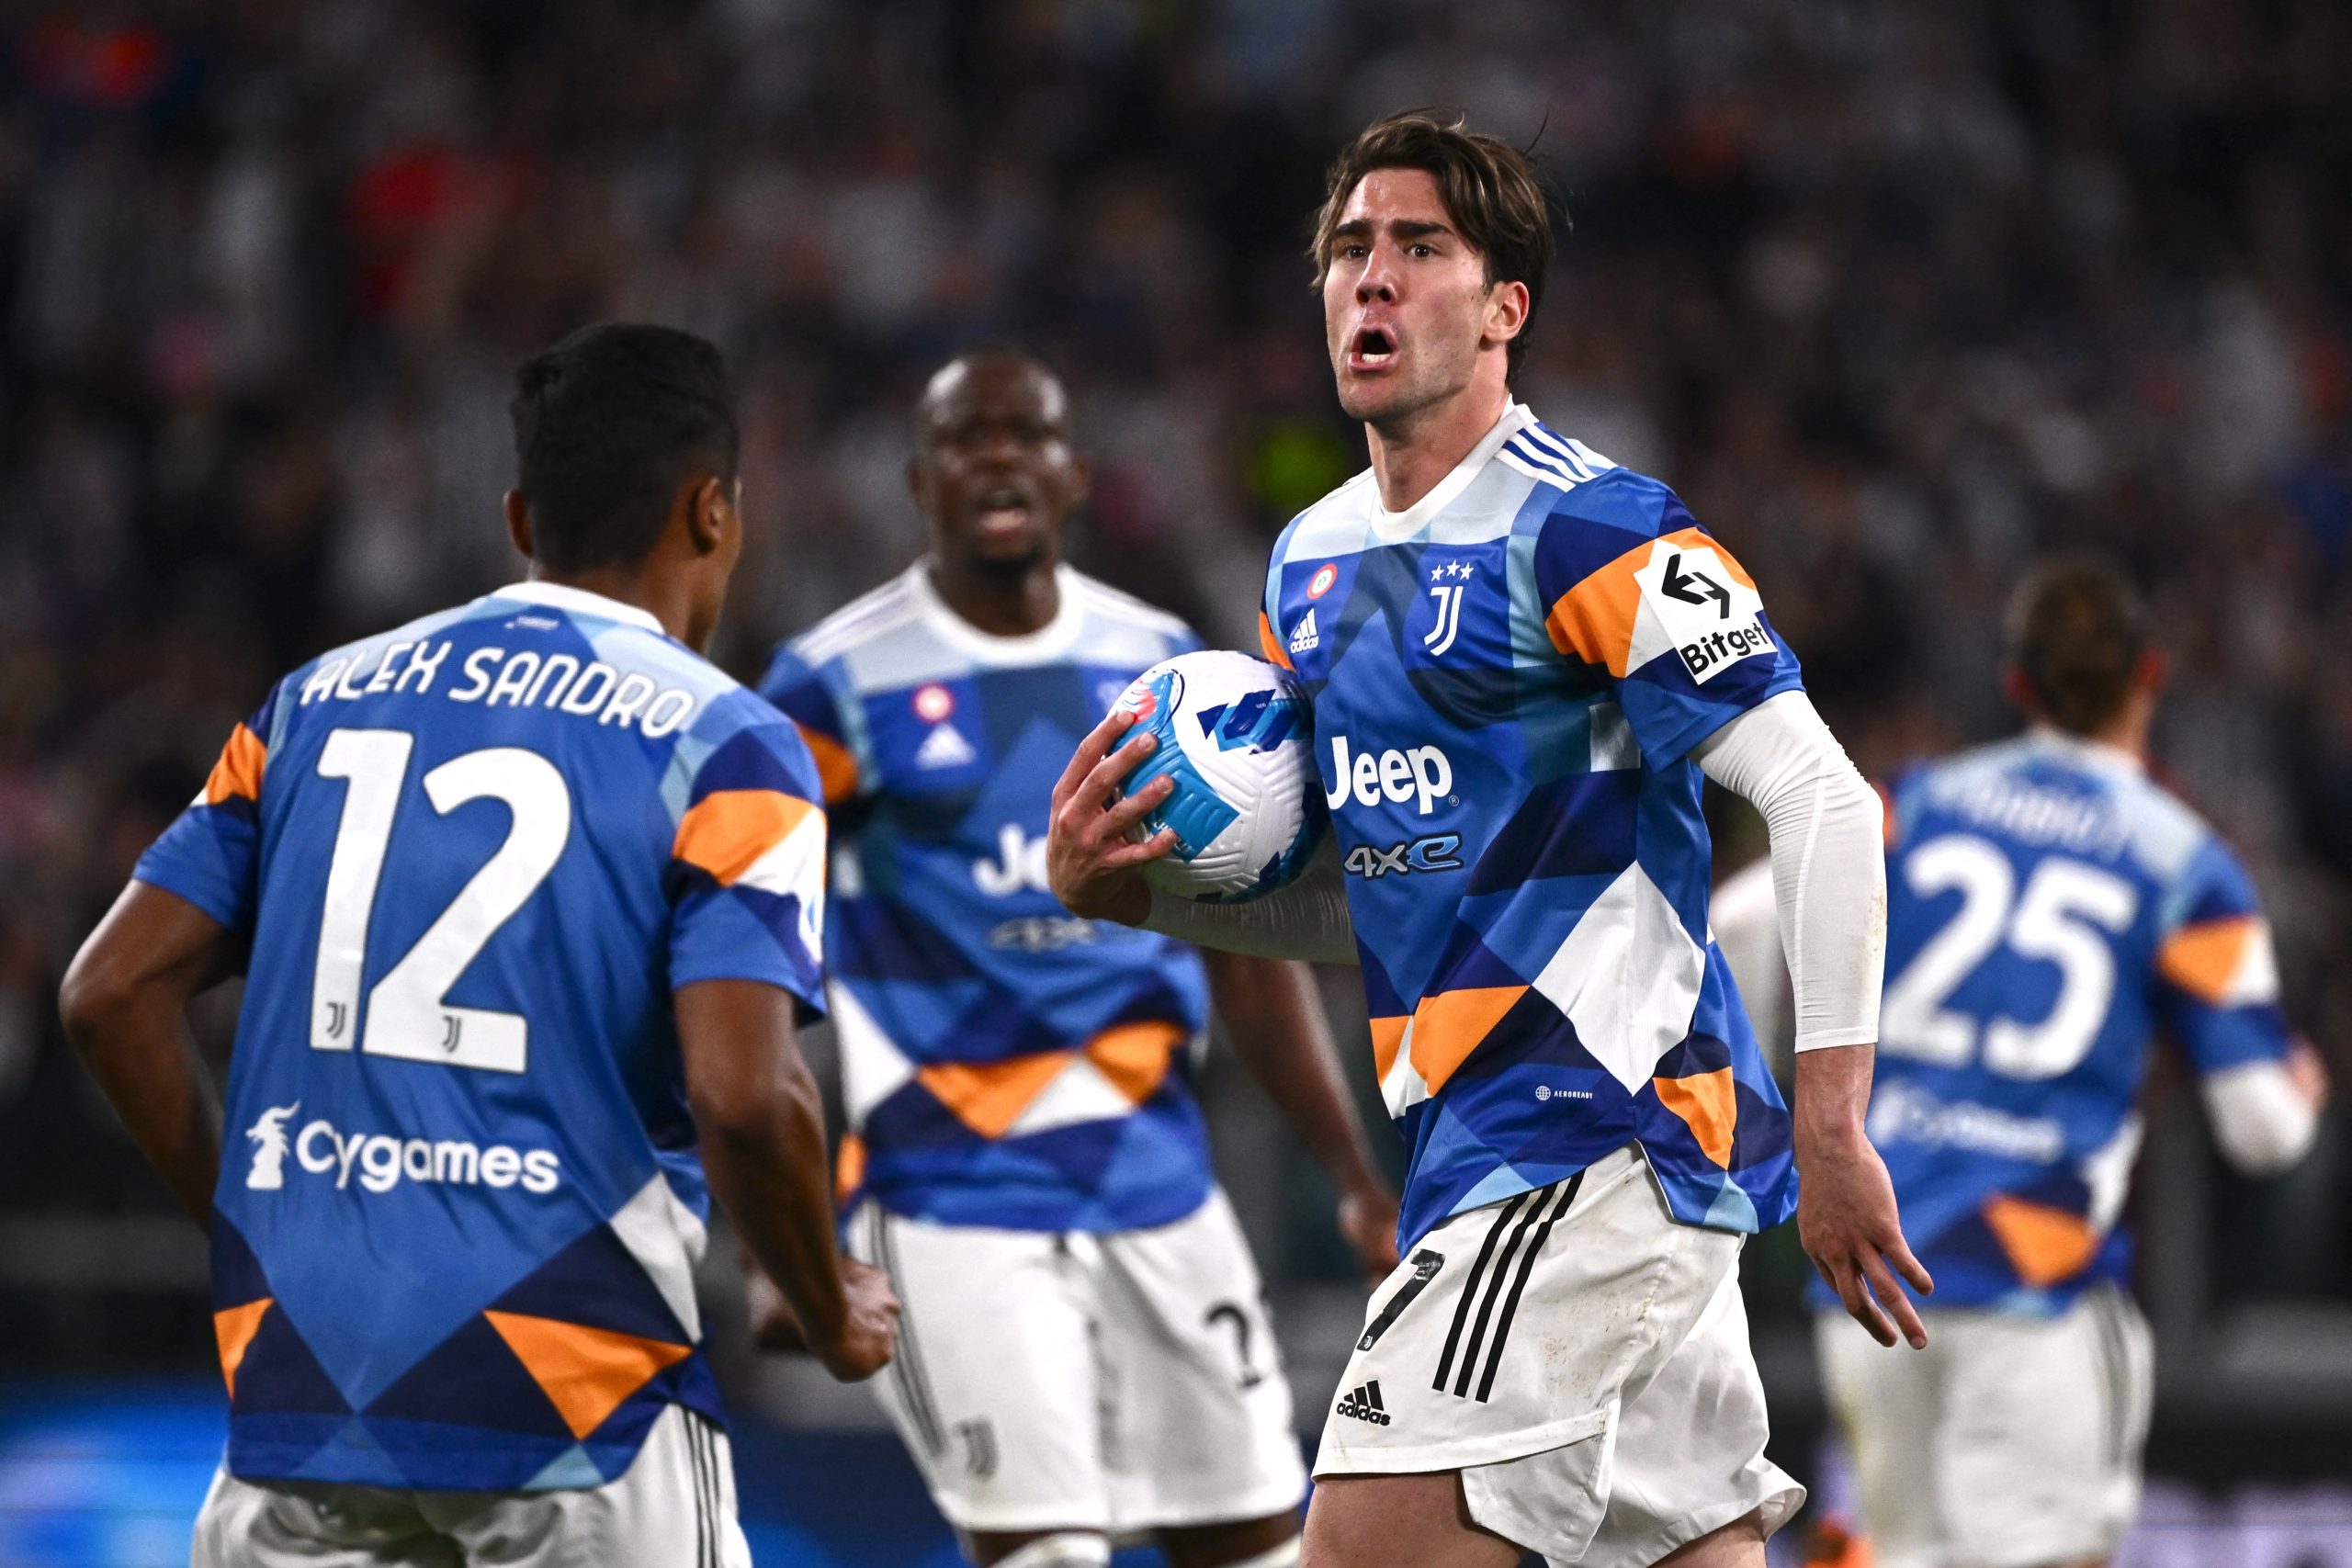 Last-gasp penalty takes Torino past København, UEFA Europa League